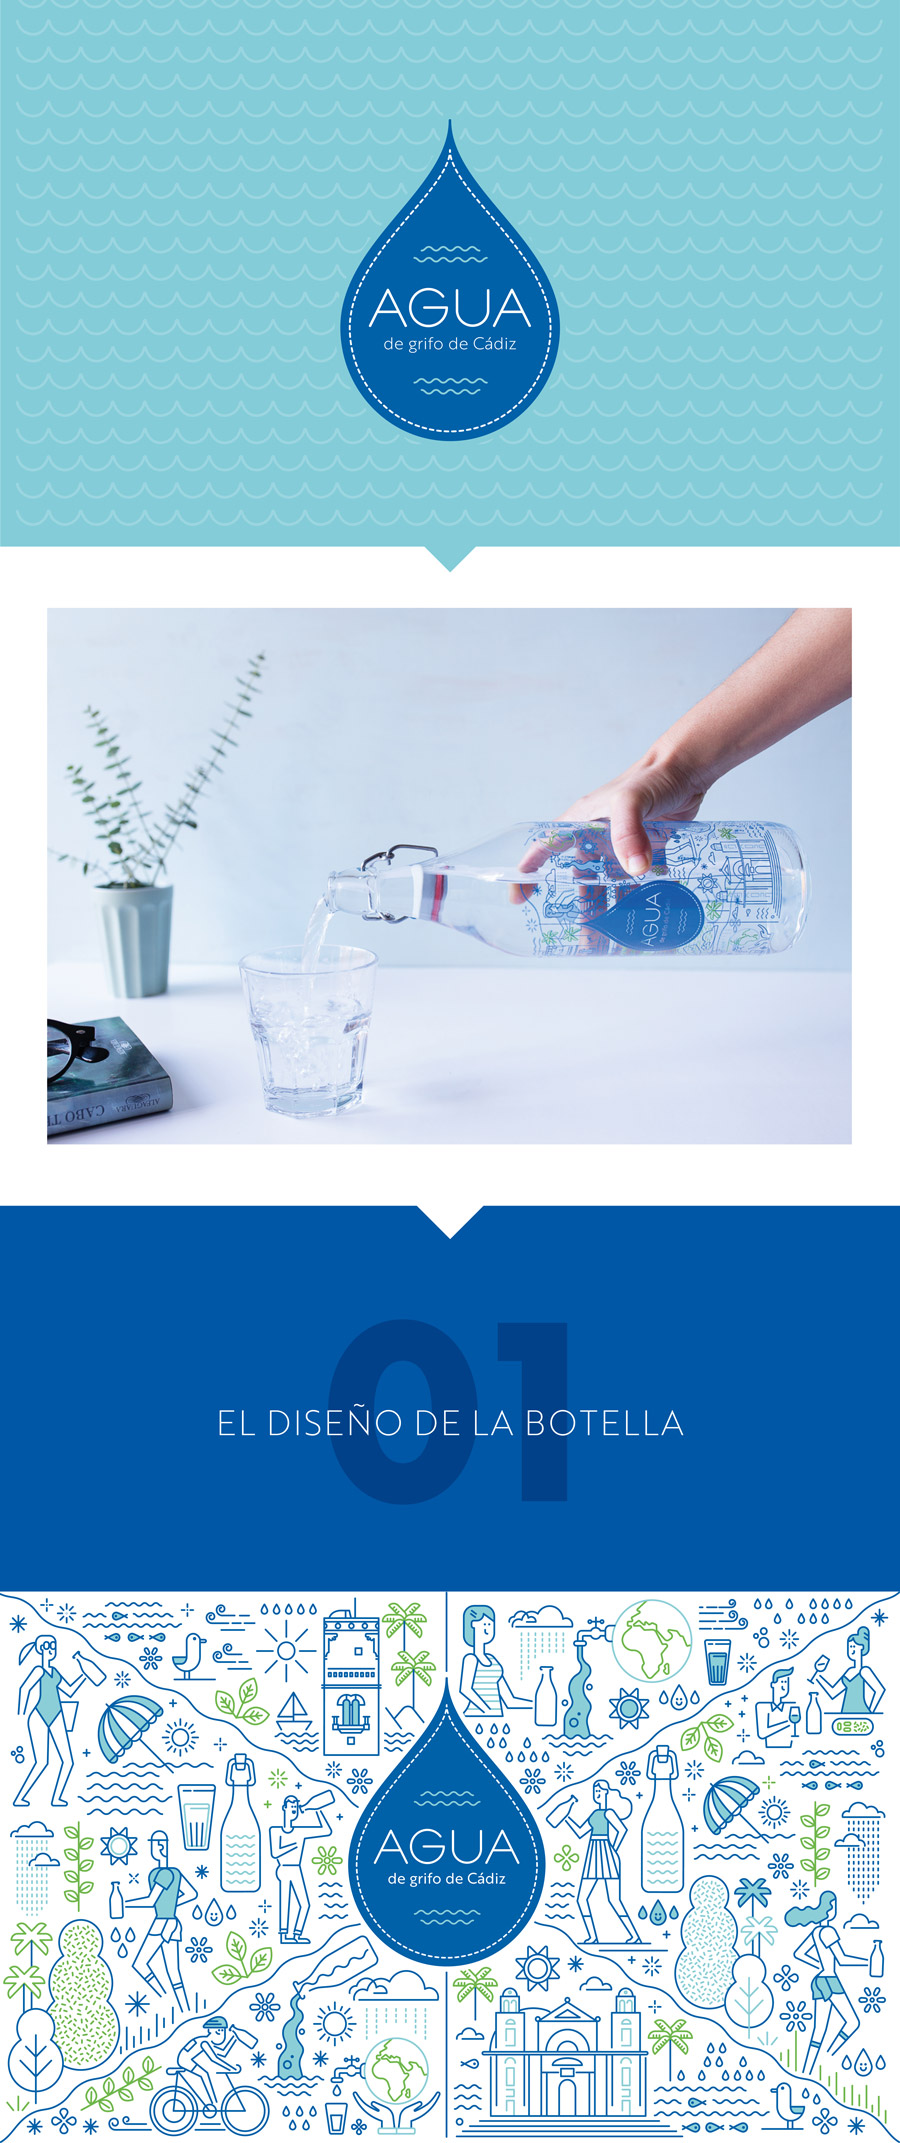 Botella Agua de grifo de Cádiz